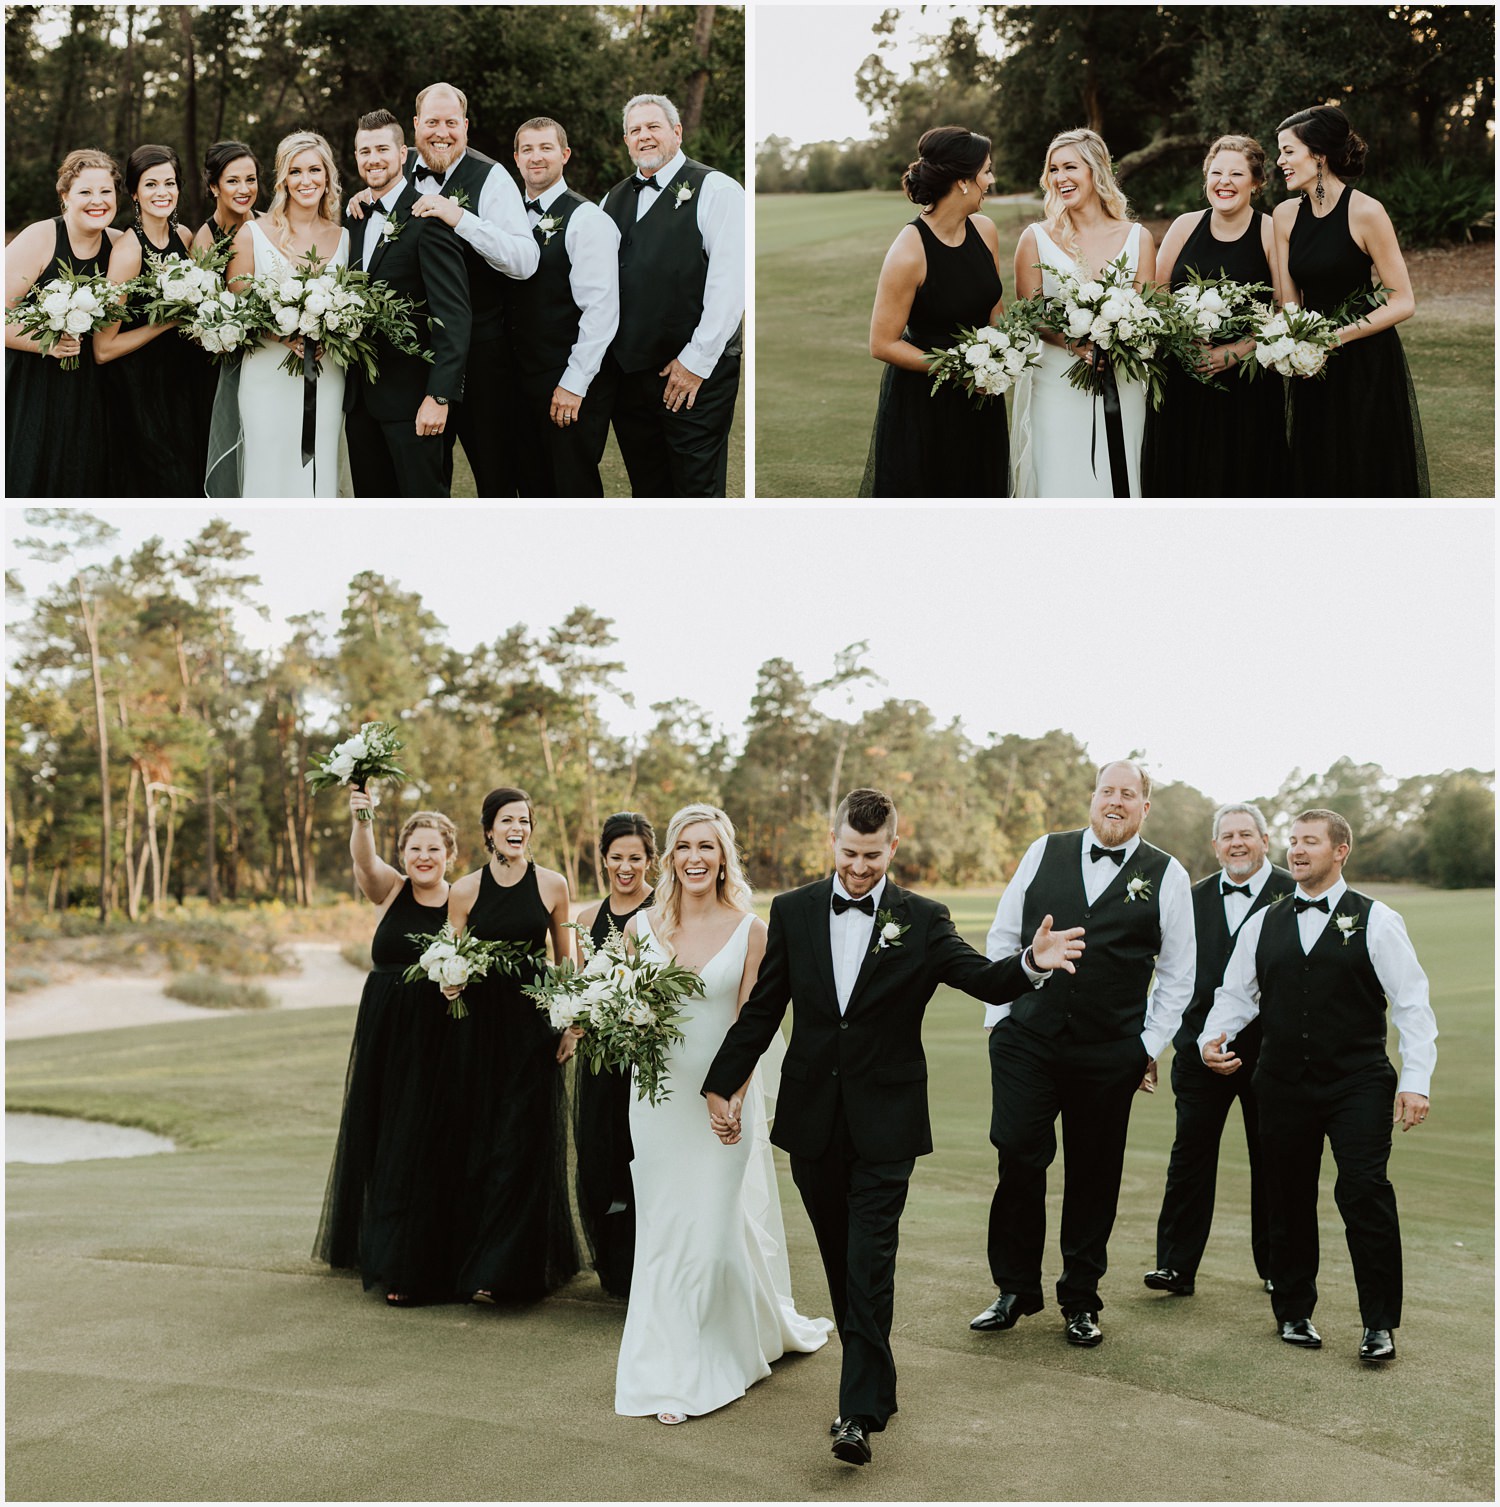 Wedding party photos at the Shark's Tooth Golf Club